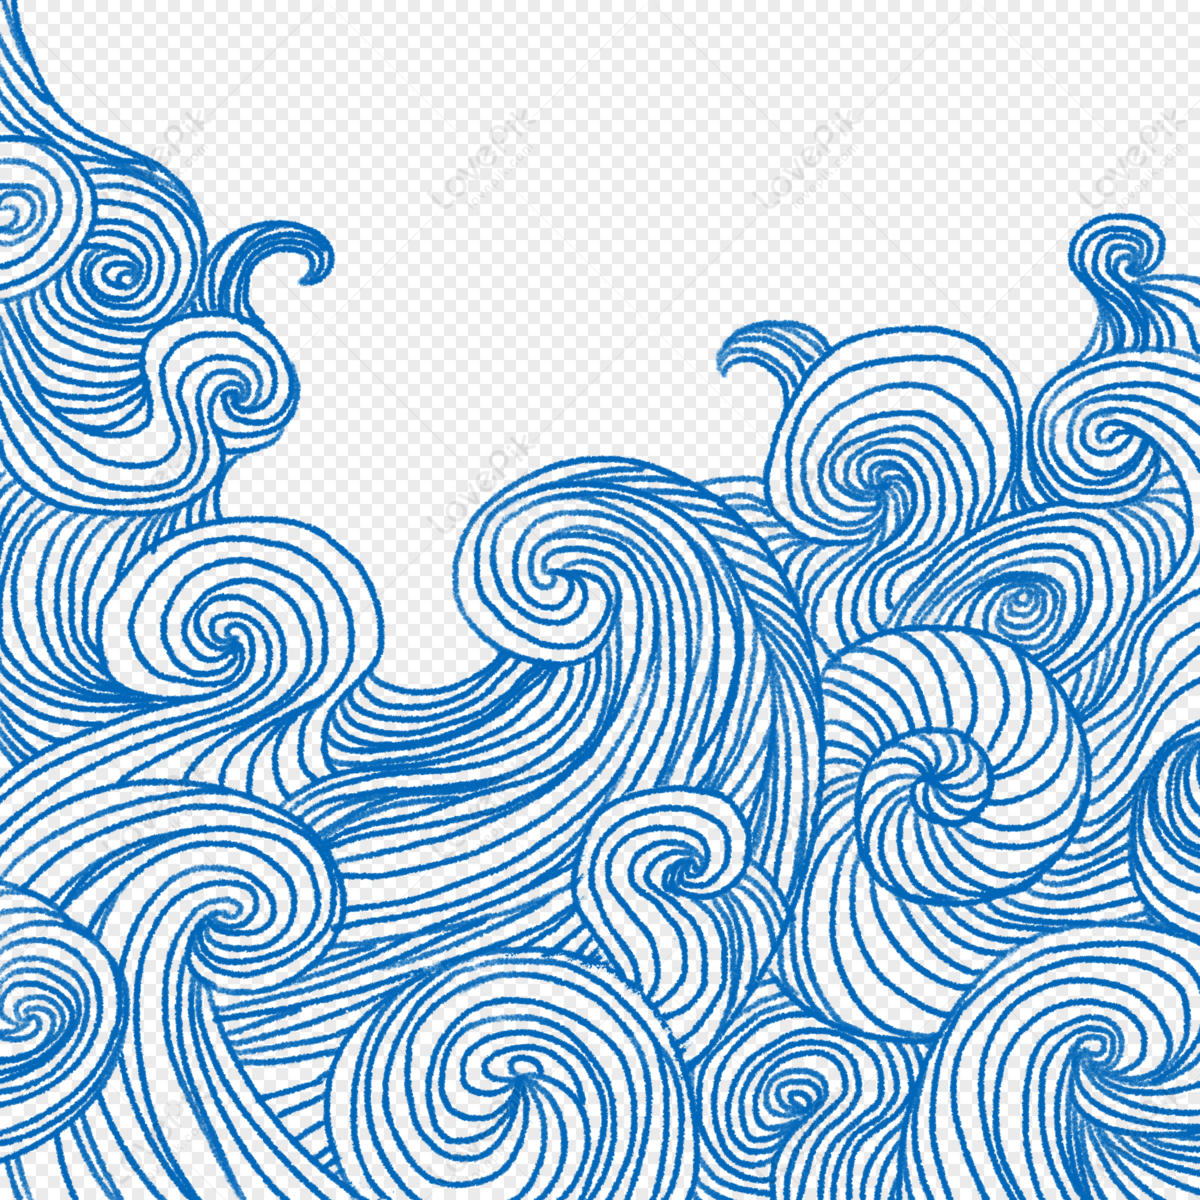 wave pattern clip art